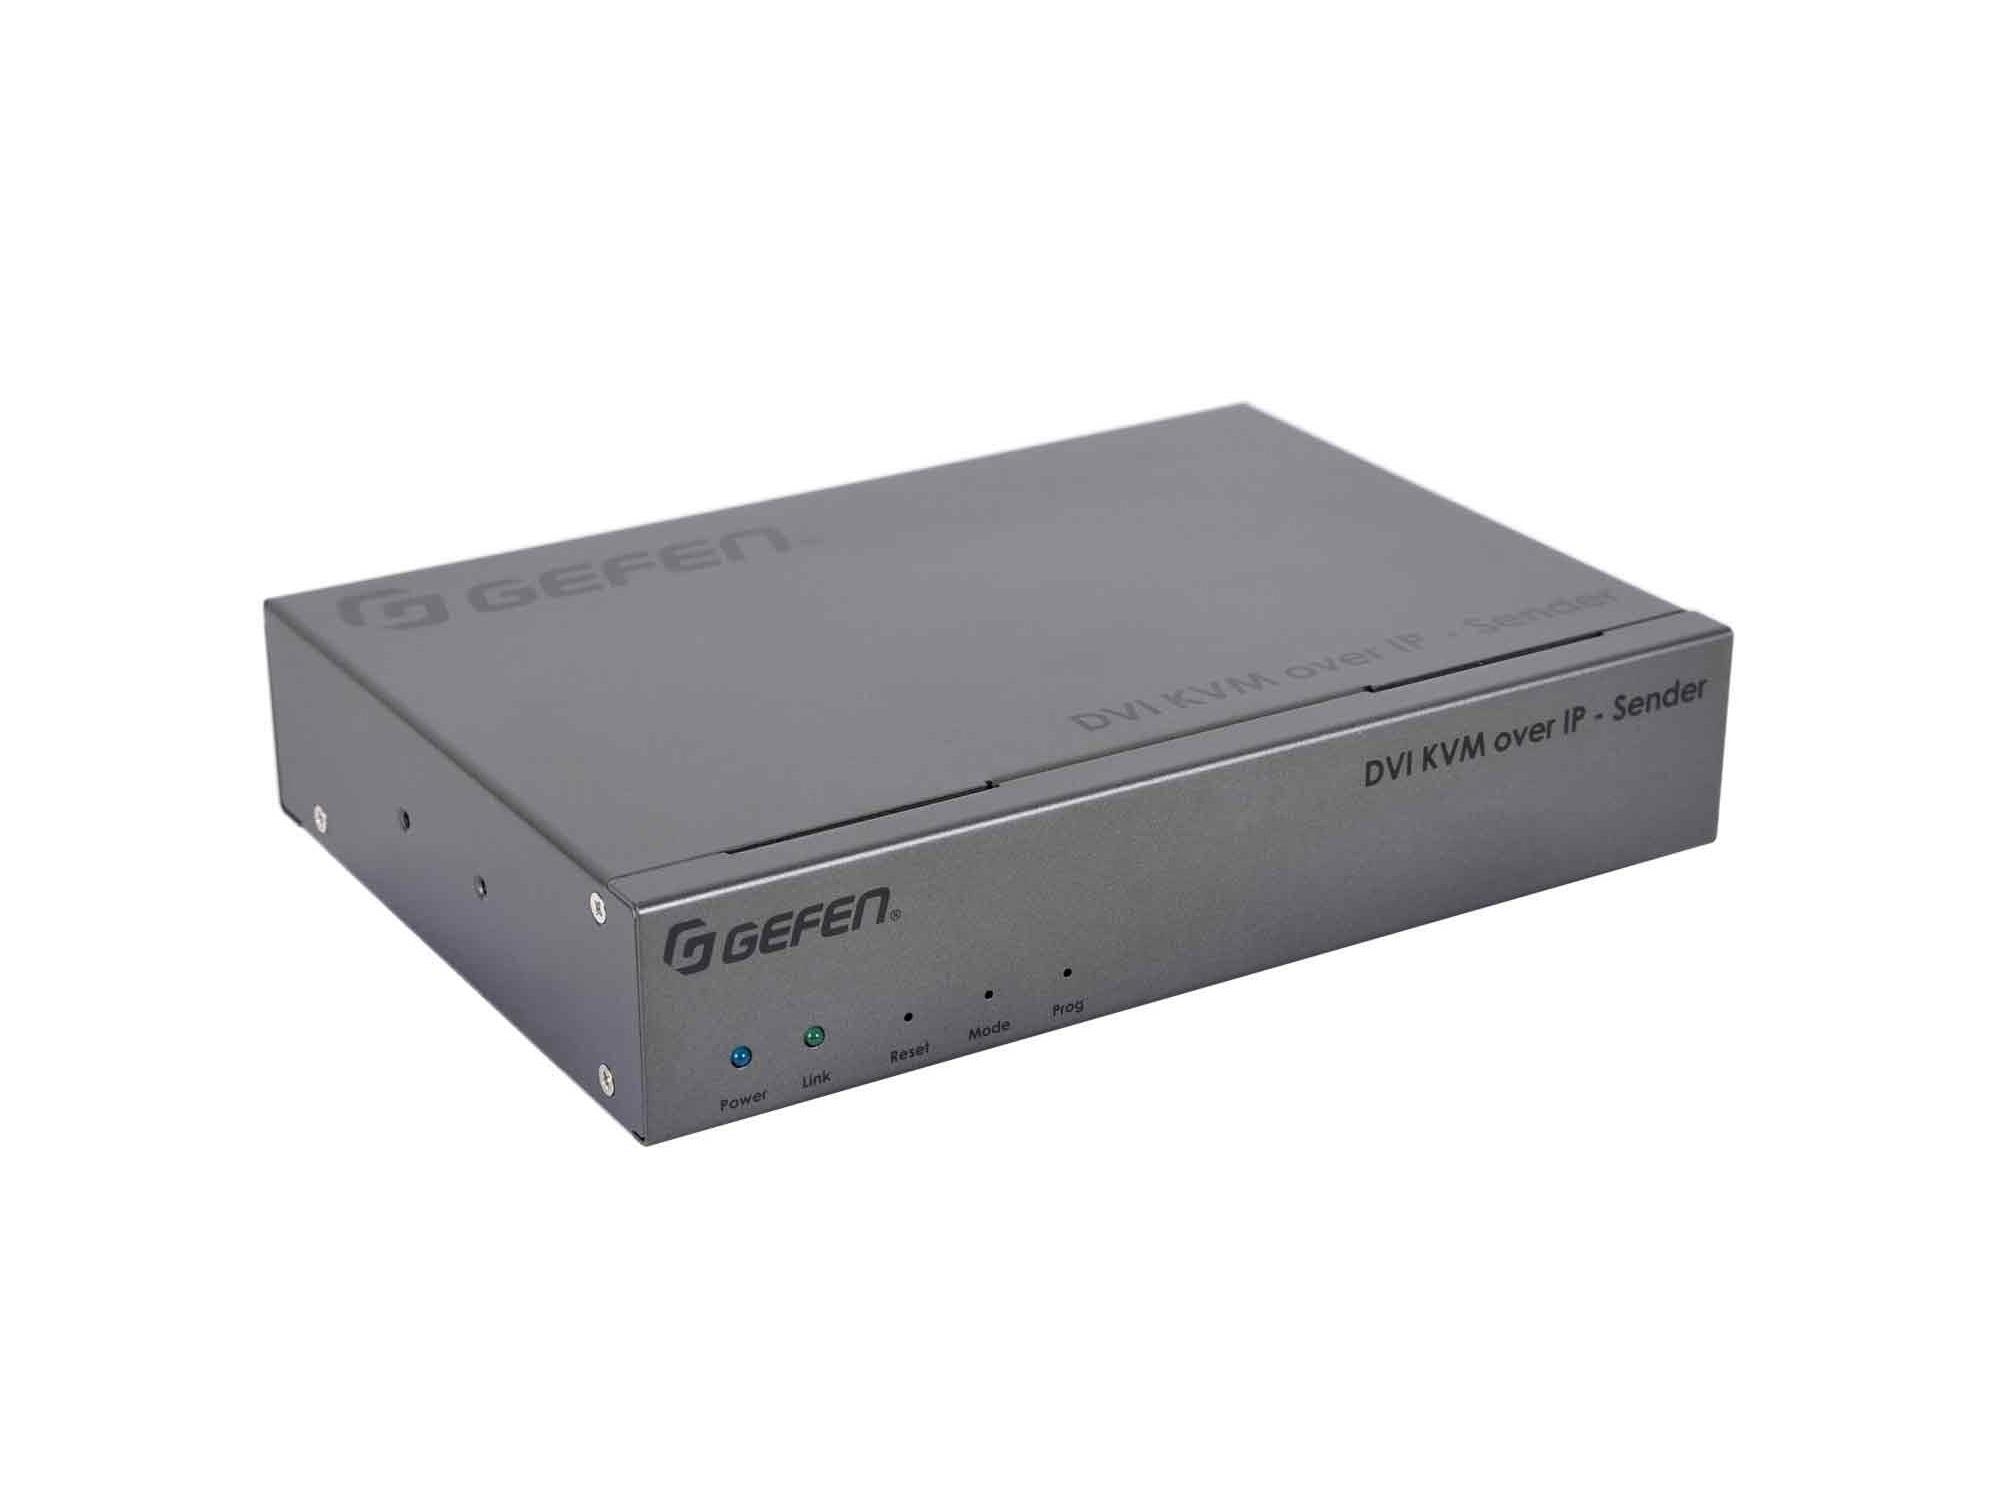 EXT-DVIKA-LANS-TX DVI KVM over IP Extender (Transmitter) with USB/Audio/RS-232/IR by Gefen